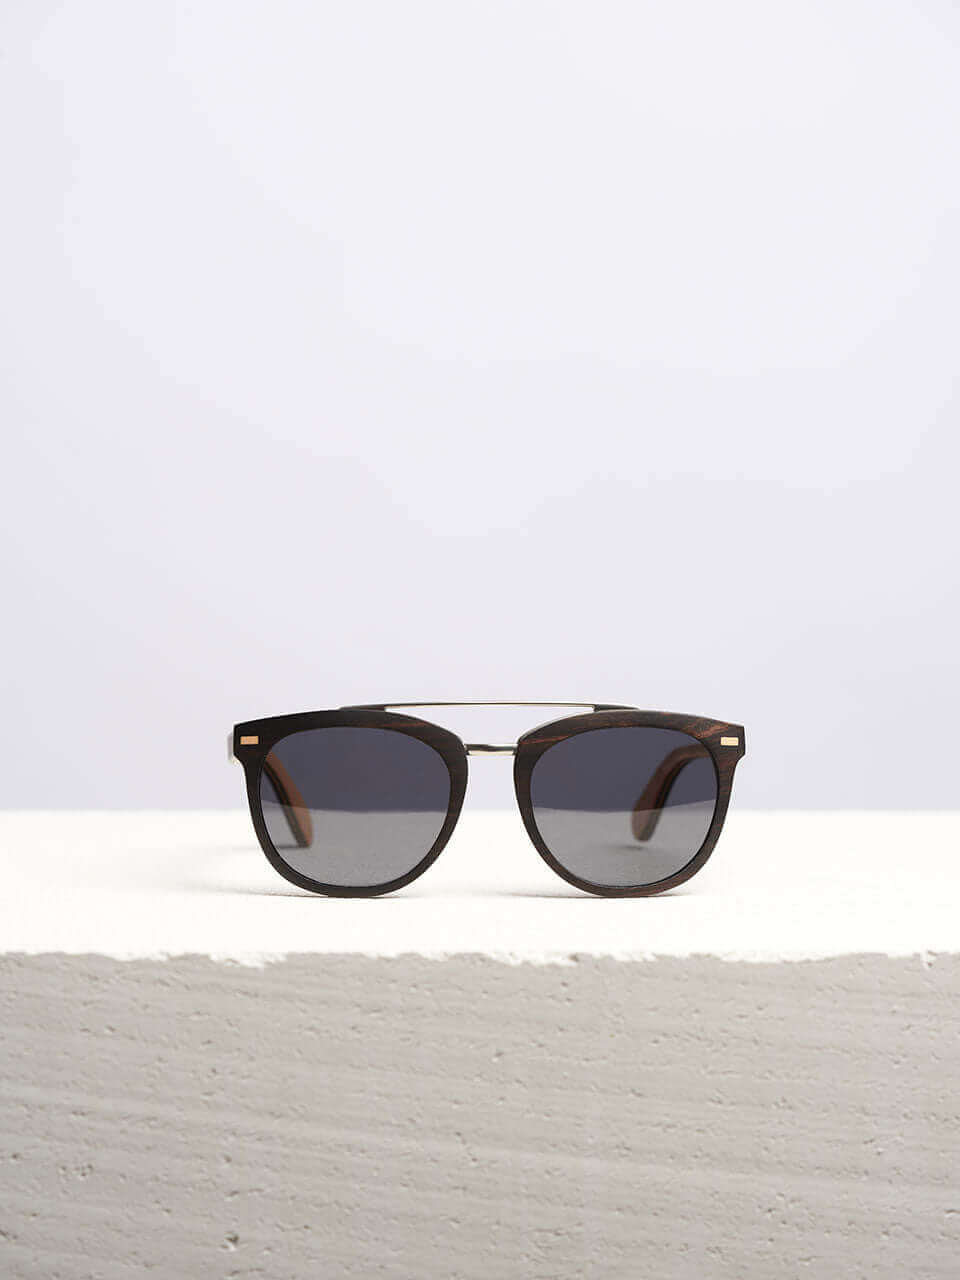 sunglasses kept on a white platform